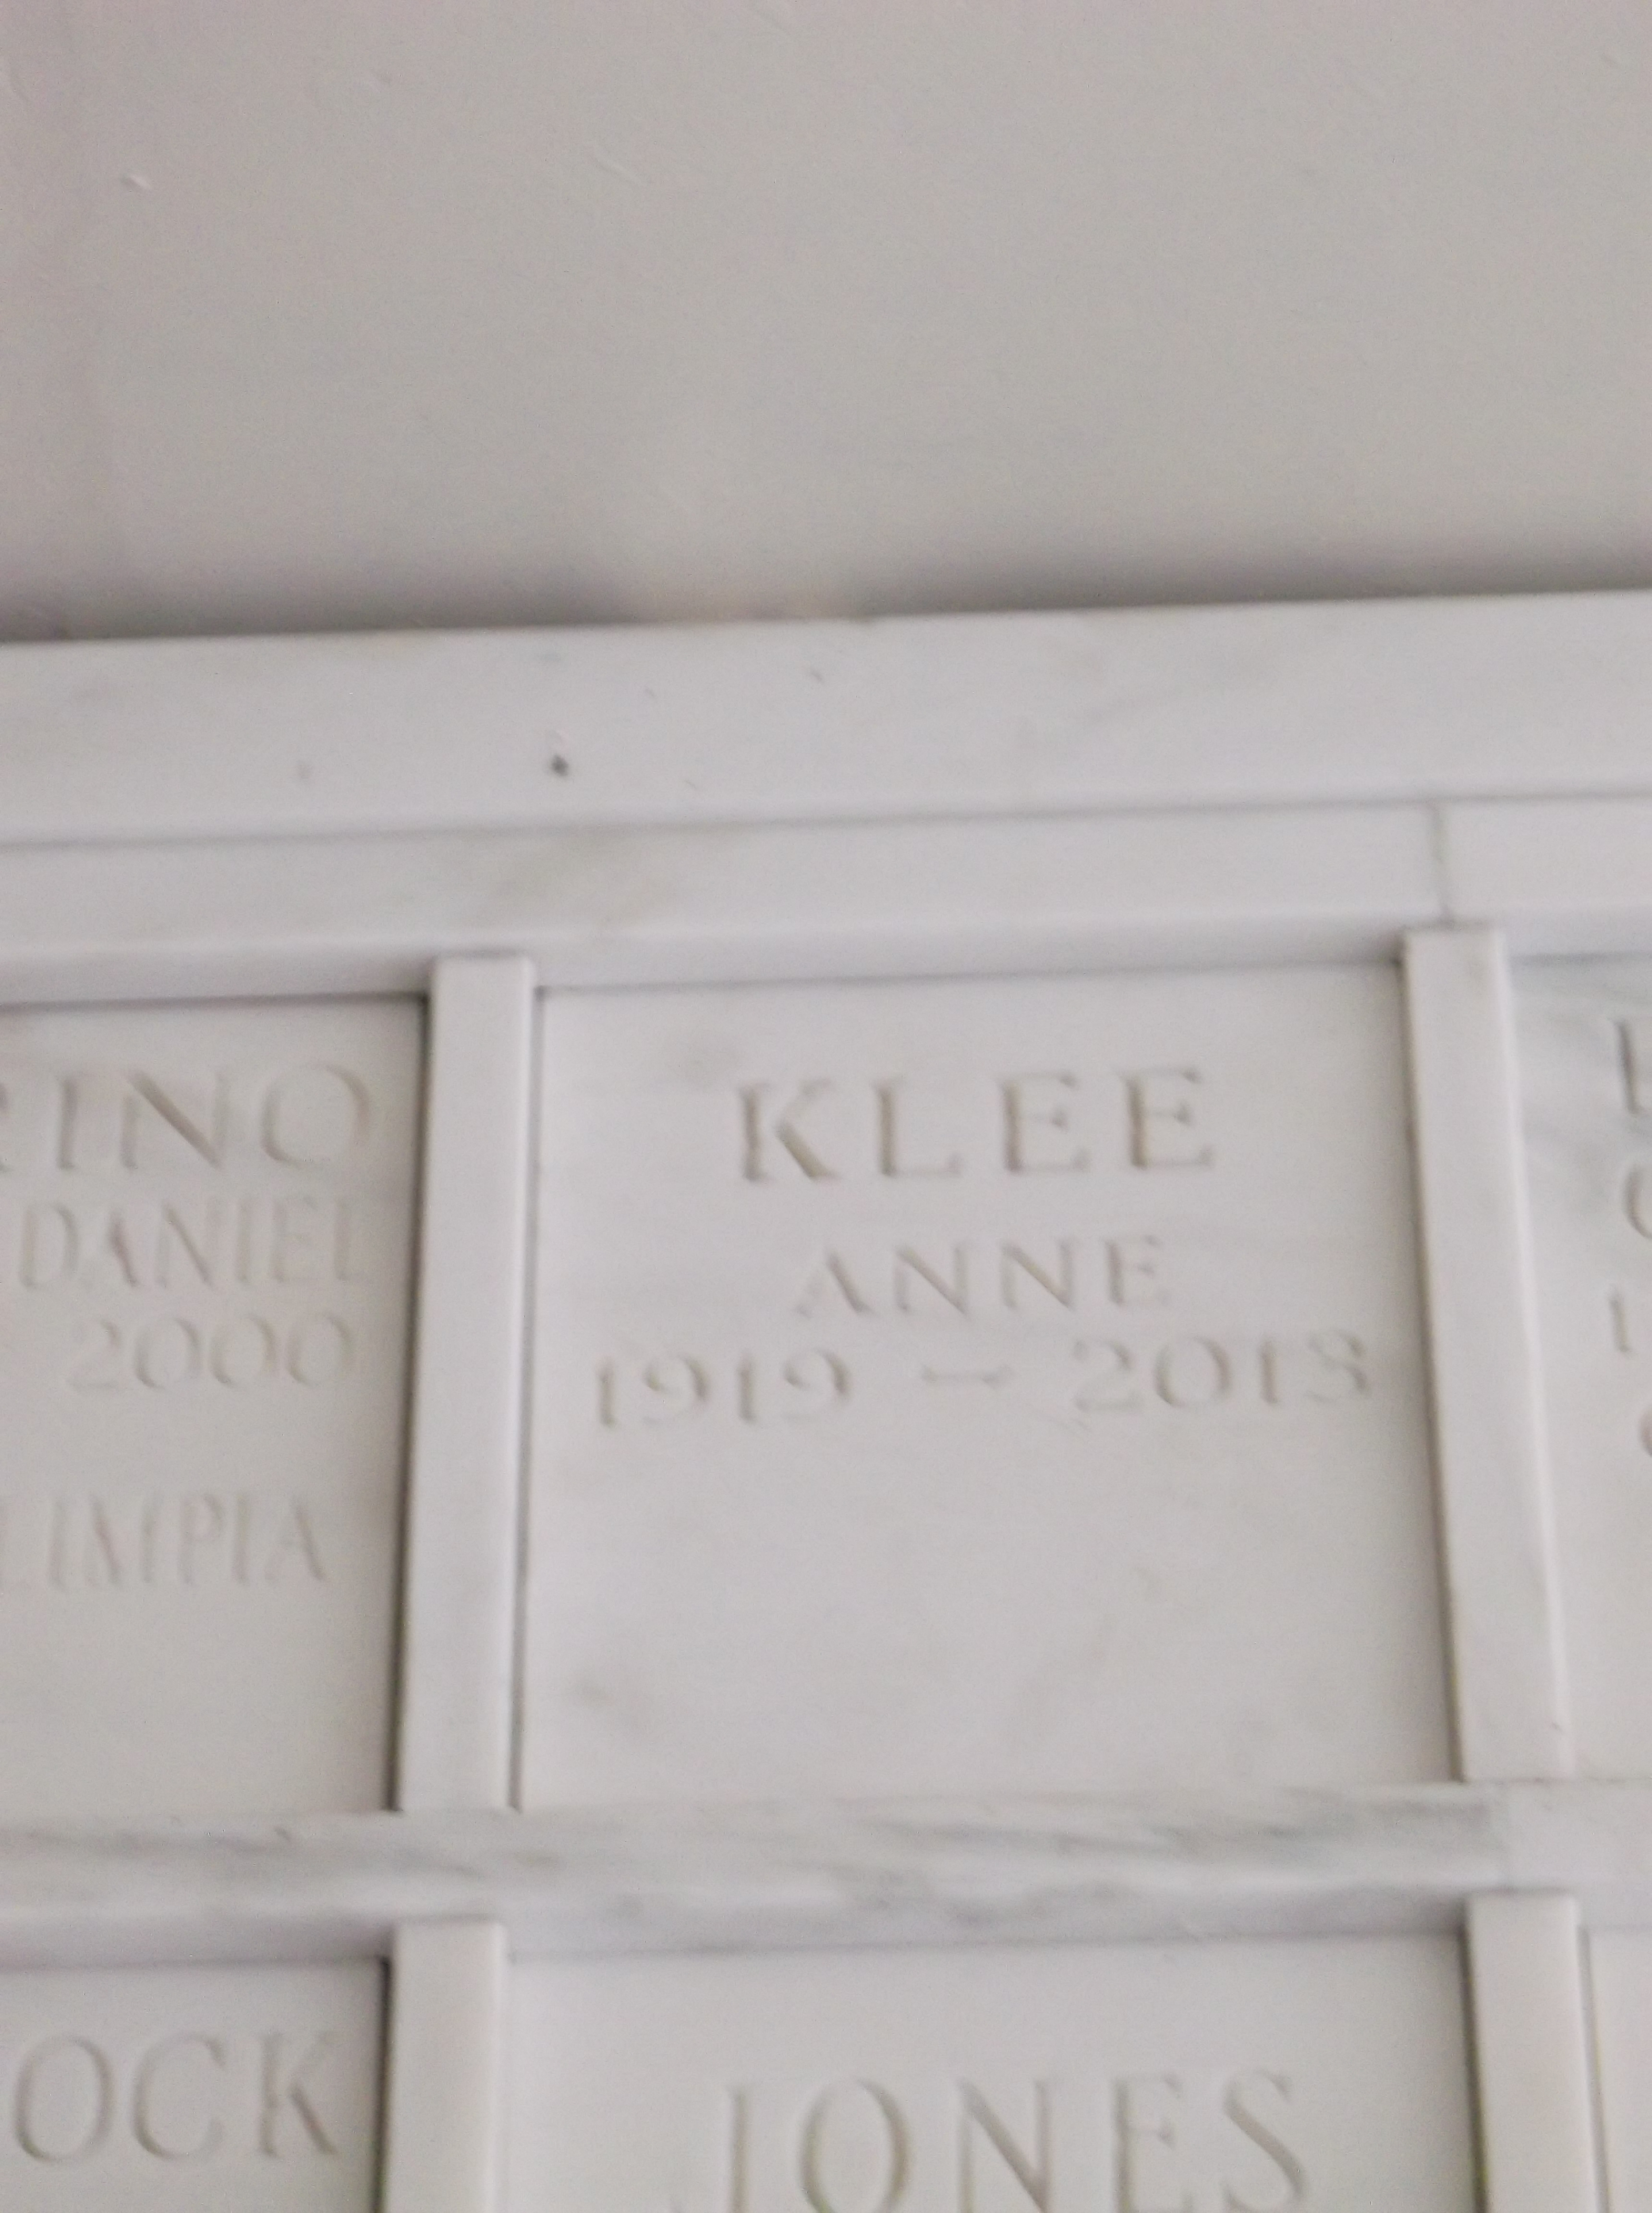 Anne Klee